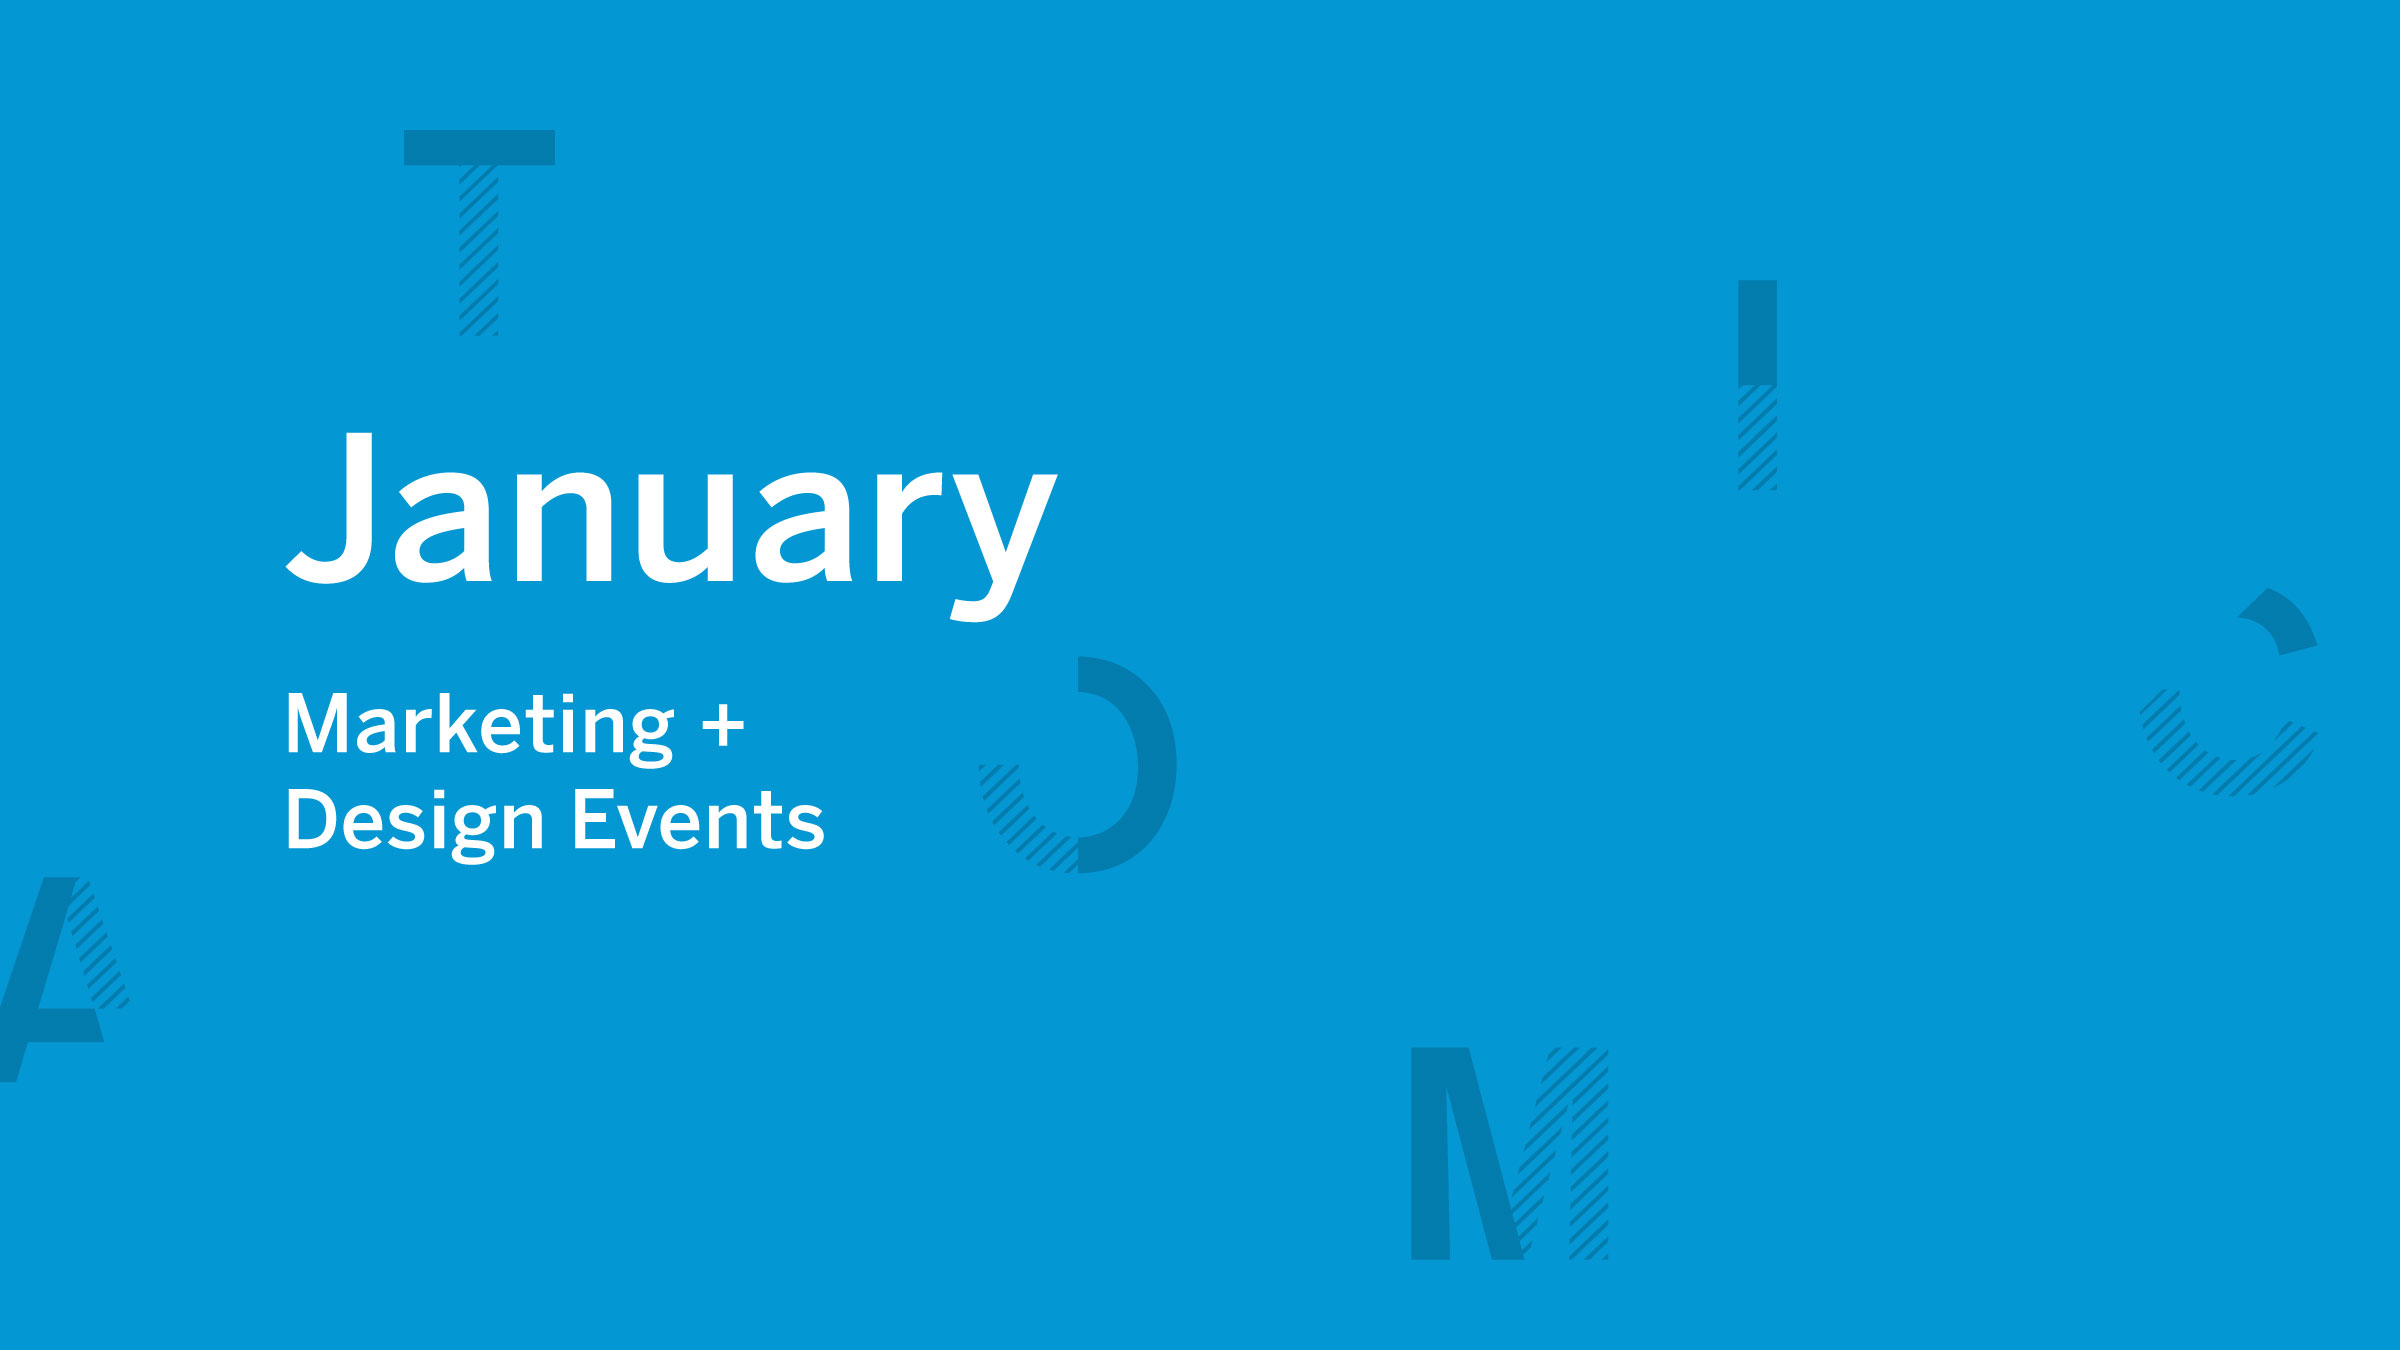 January 2020 Marketing + Design Events